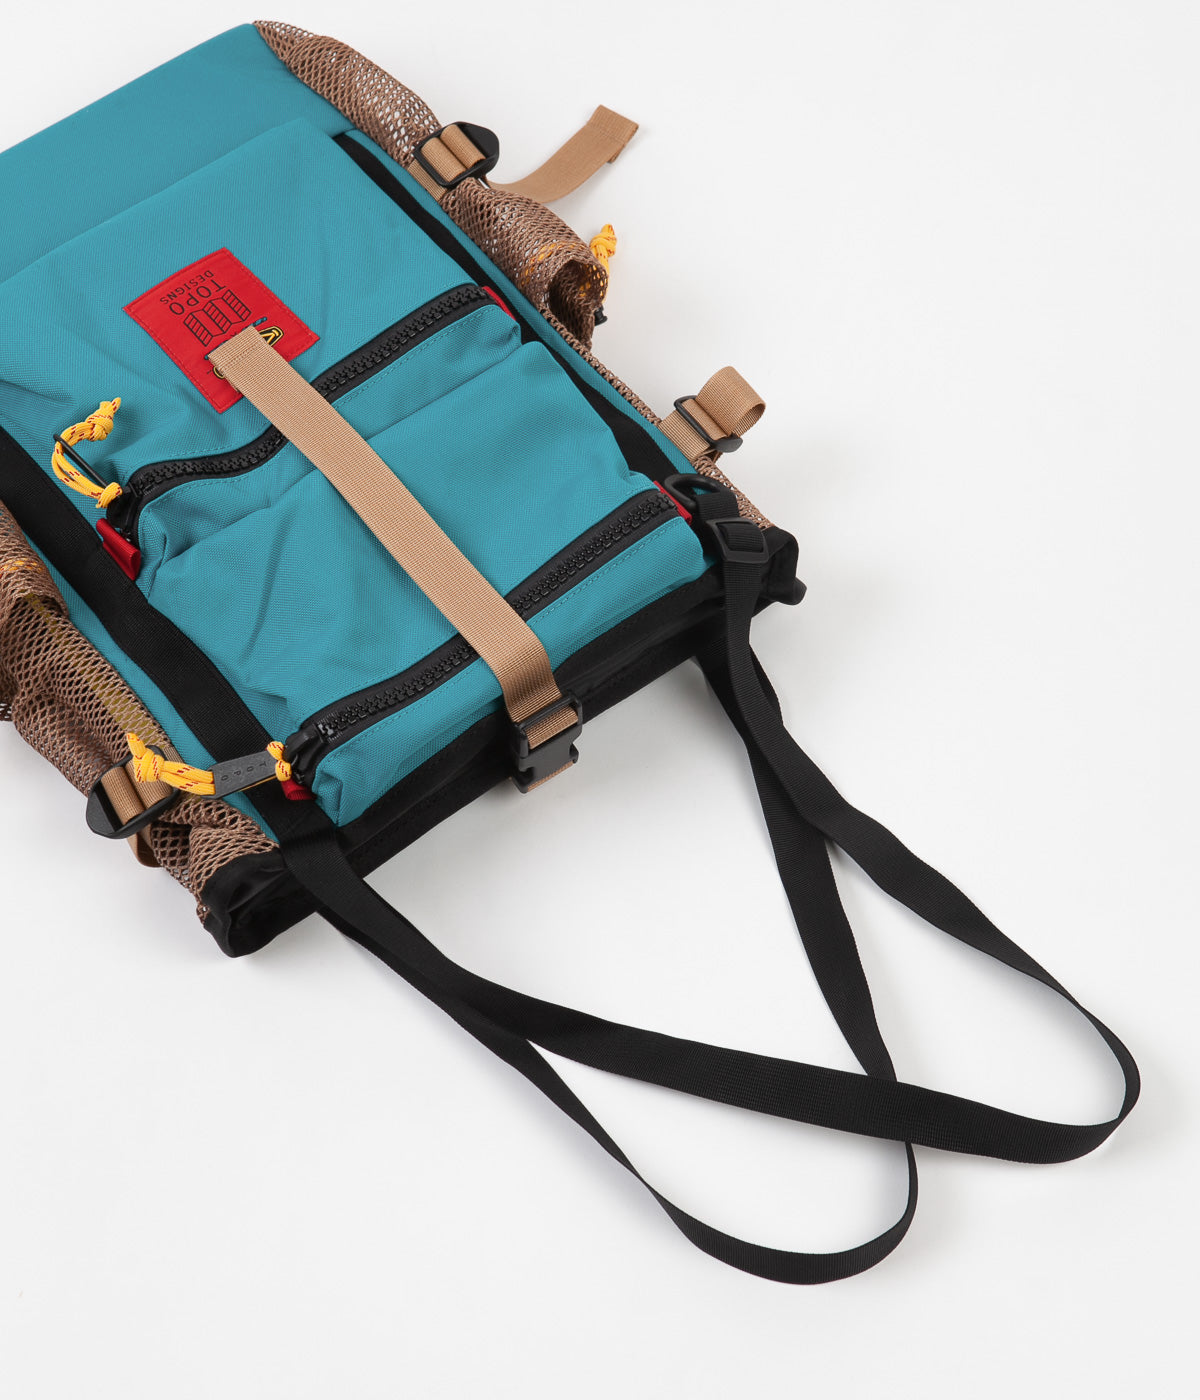 Topo Designs Global Travel Bag 30L Navy the most versatile travel bag